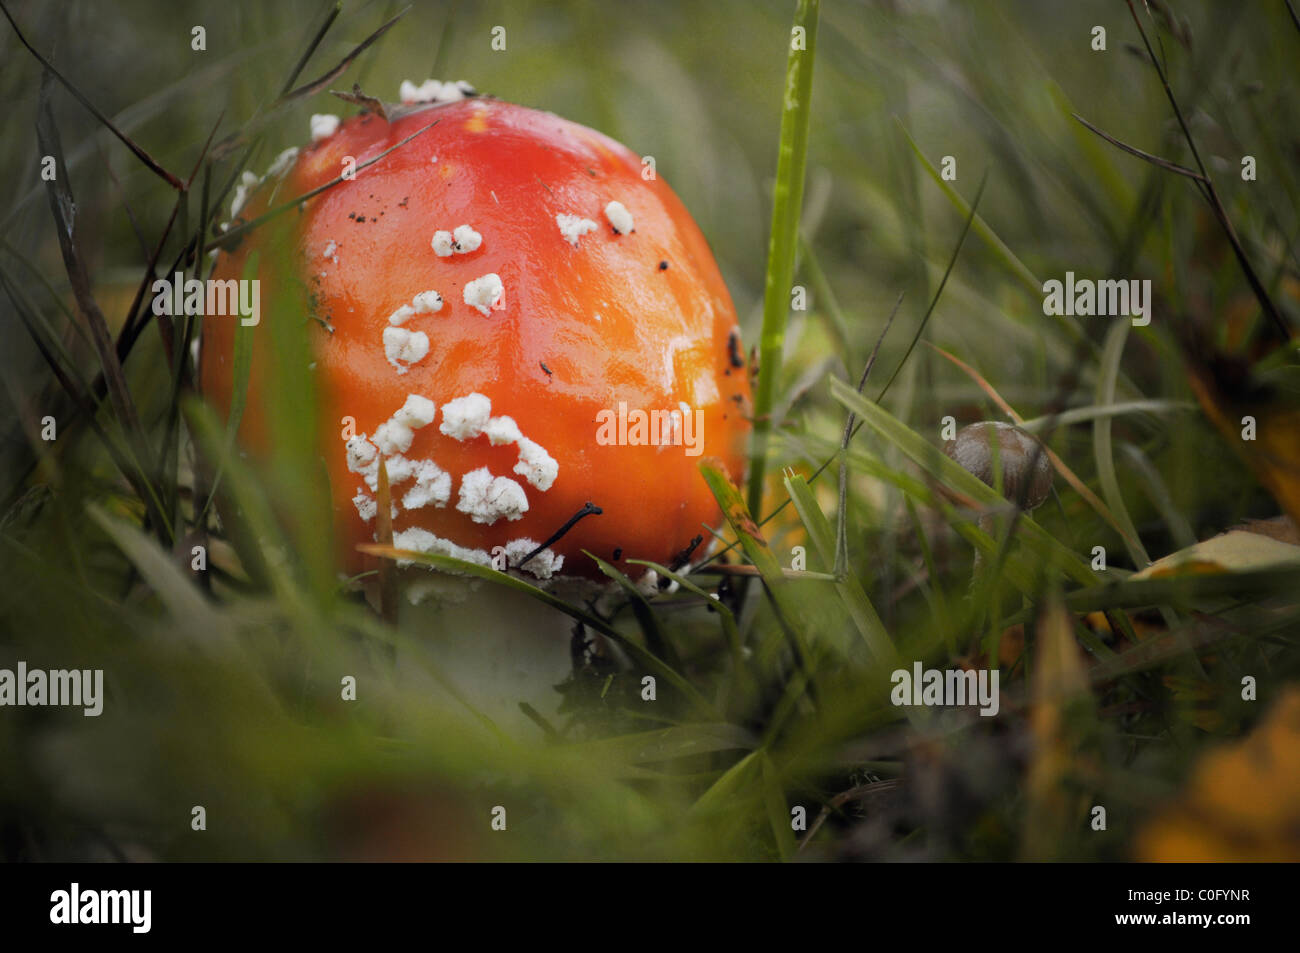 Mushroom hiding in the grass Stock Photo